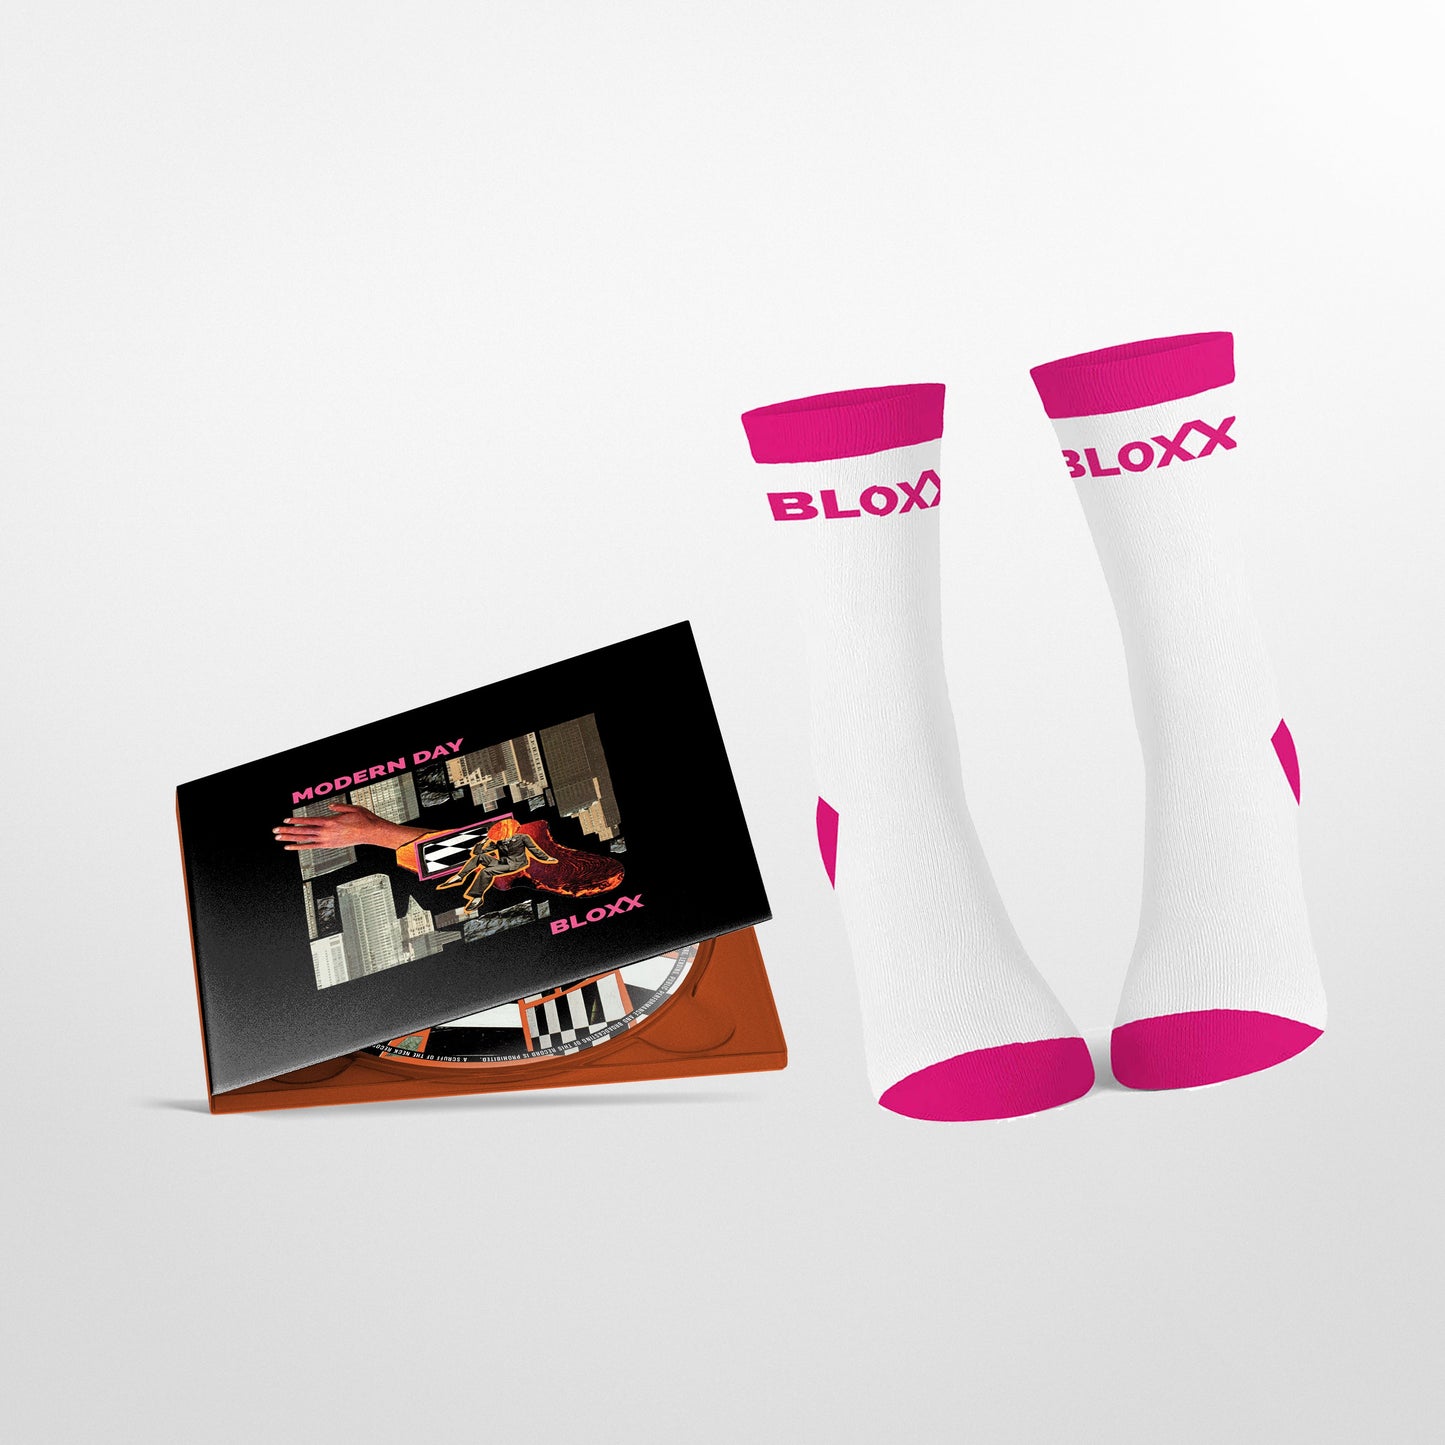 BLOXX - 'Modern Day' EP - Bundle - CD + Socks